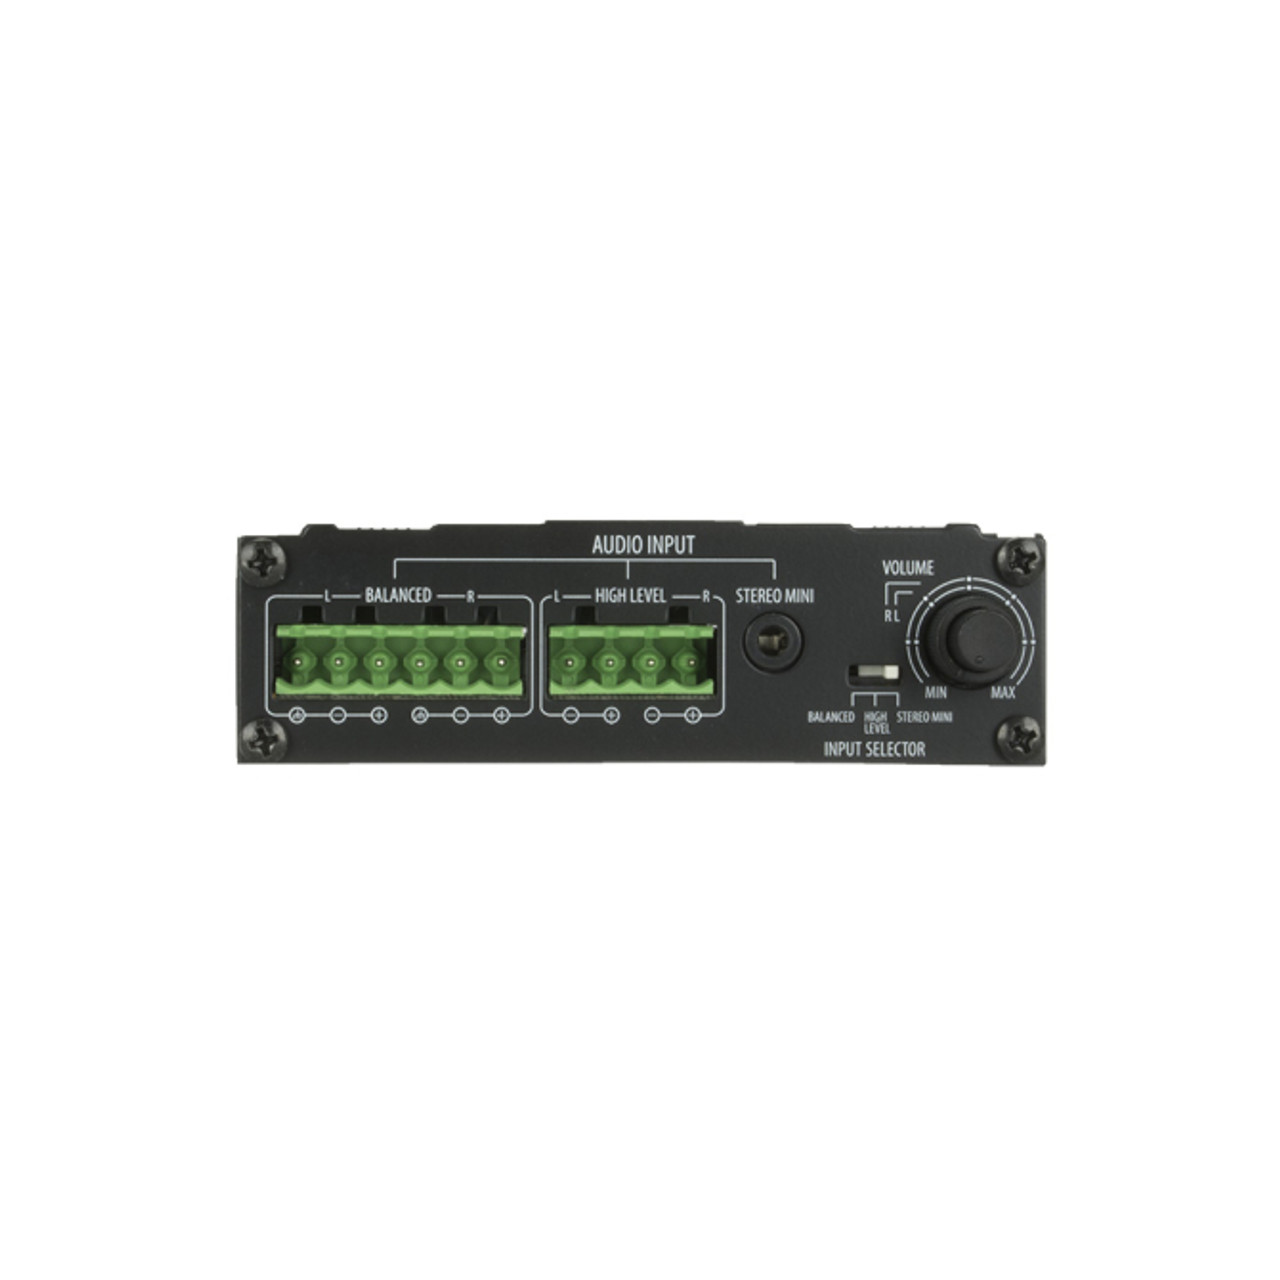 SolidDrive SD250 50 Watts Per Channel Class D Amplifier (SD250)